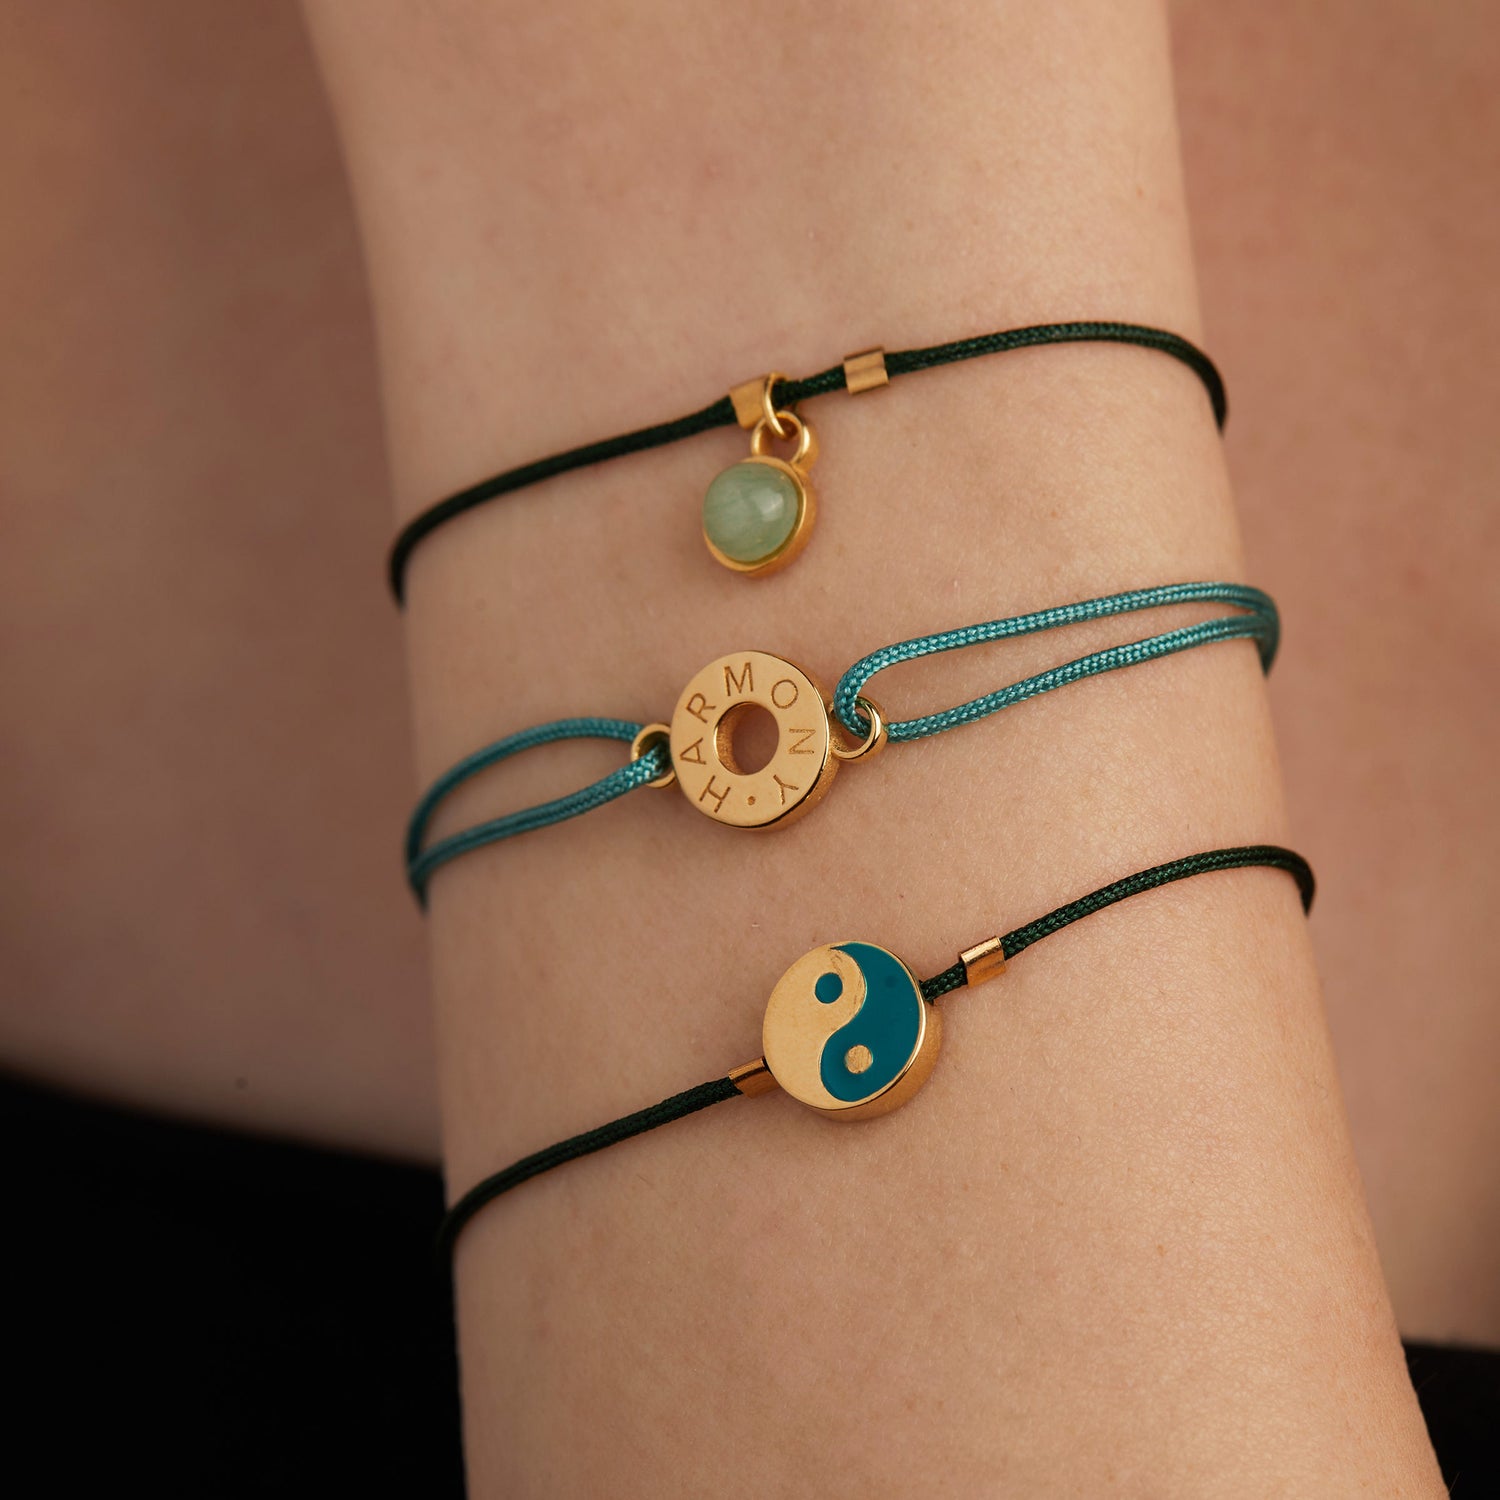 Harmony Yin Yang Cord Bracelets, Set of 3